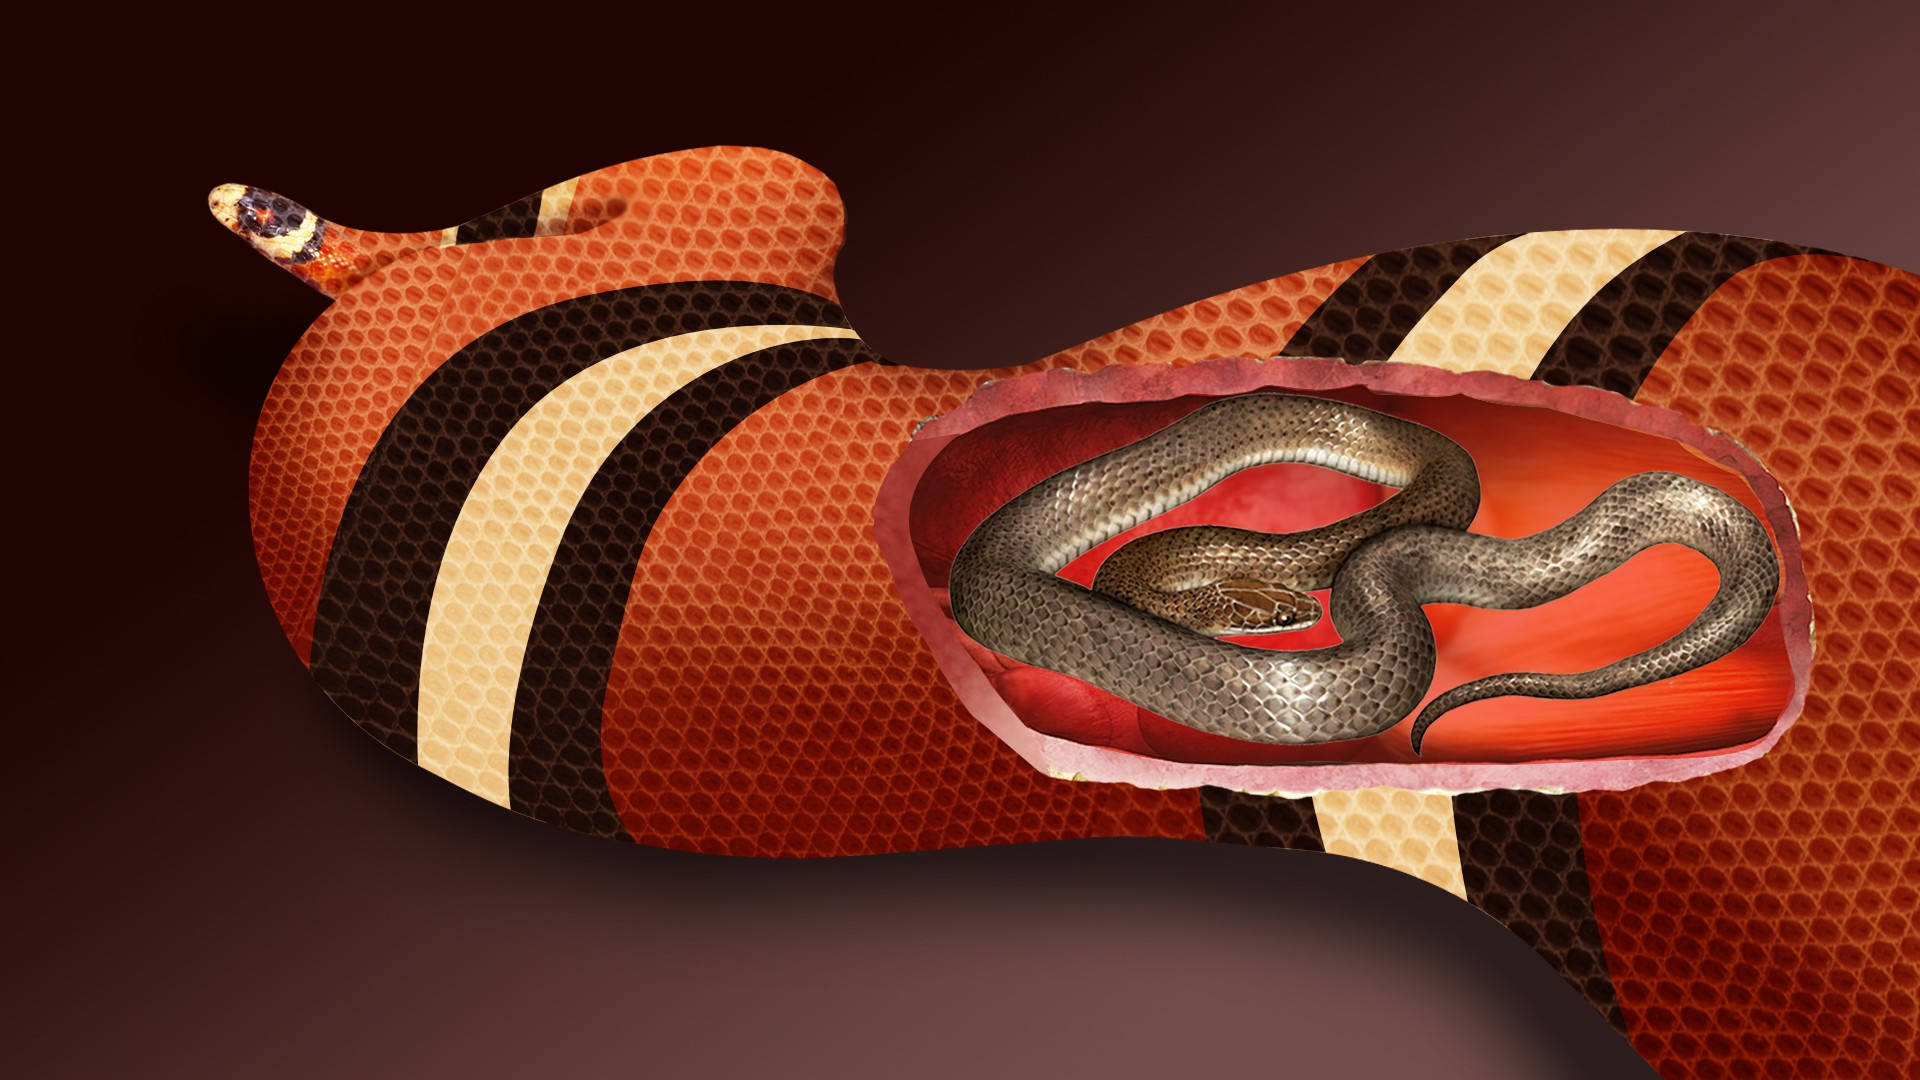 Coral Snake Open Stomach Digital Art Wallpaper